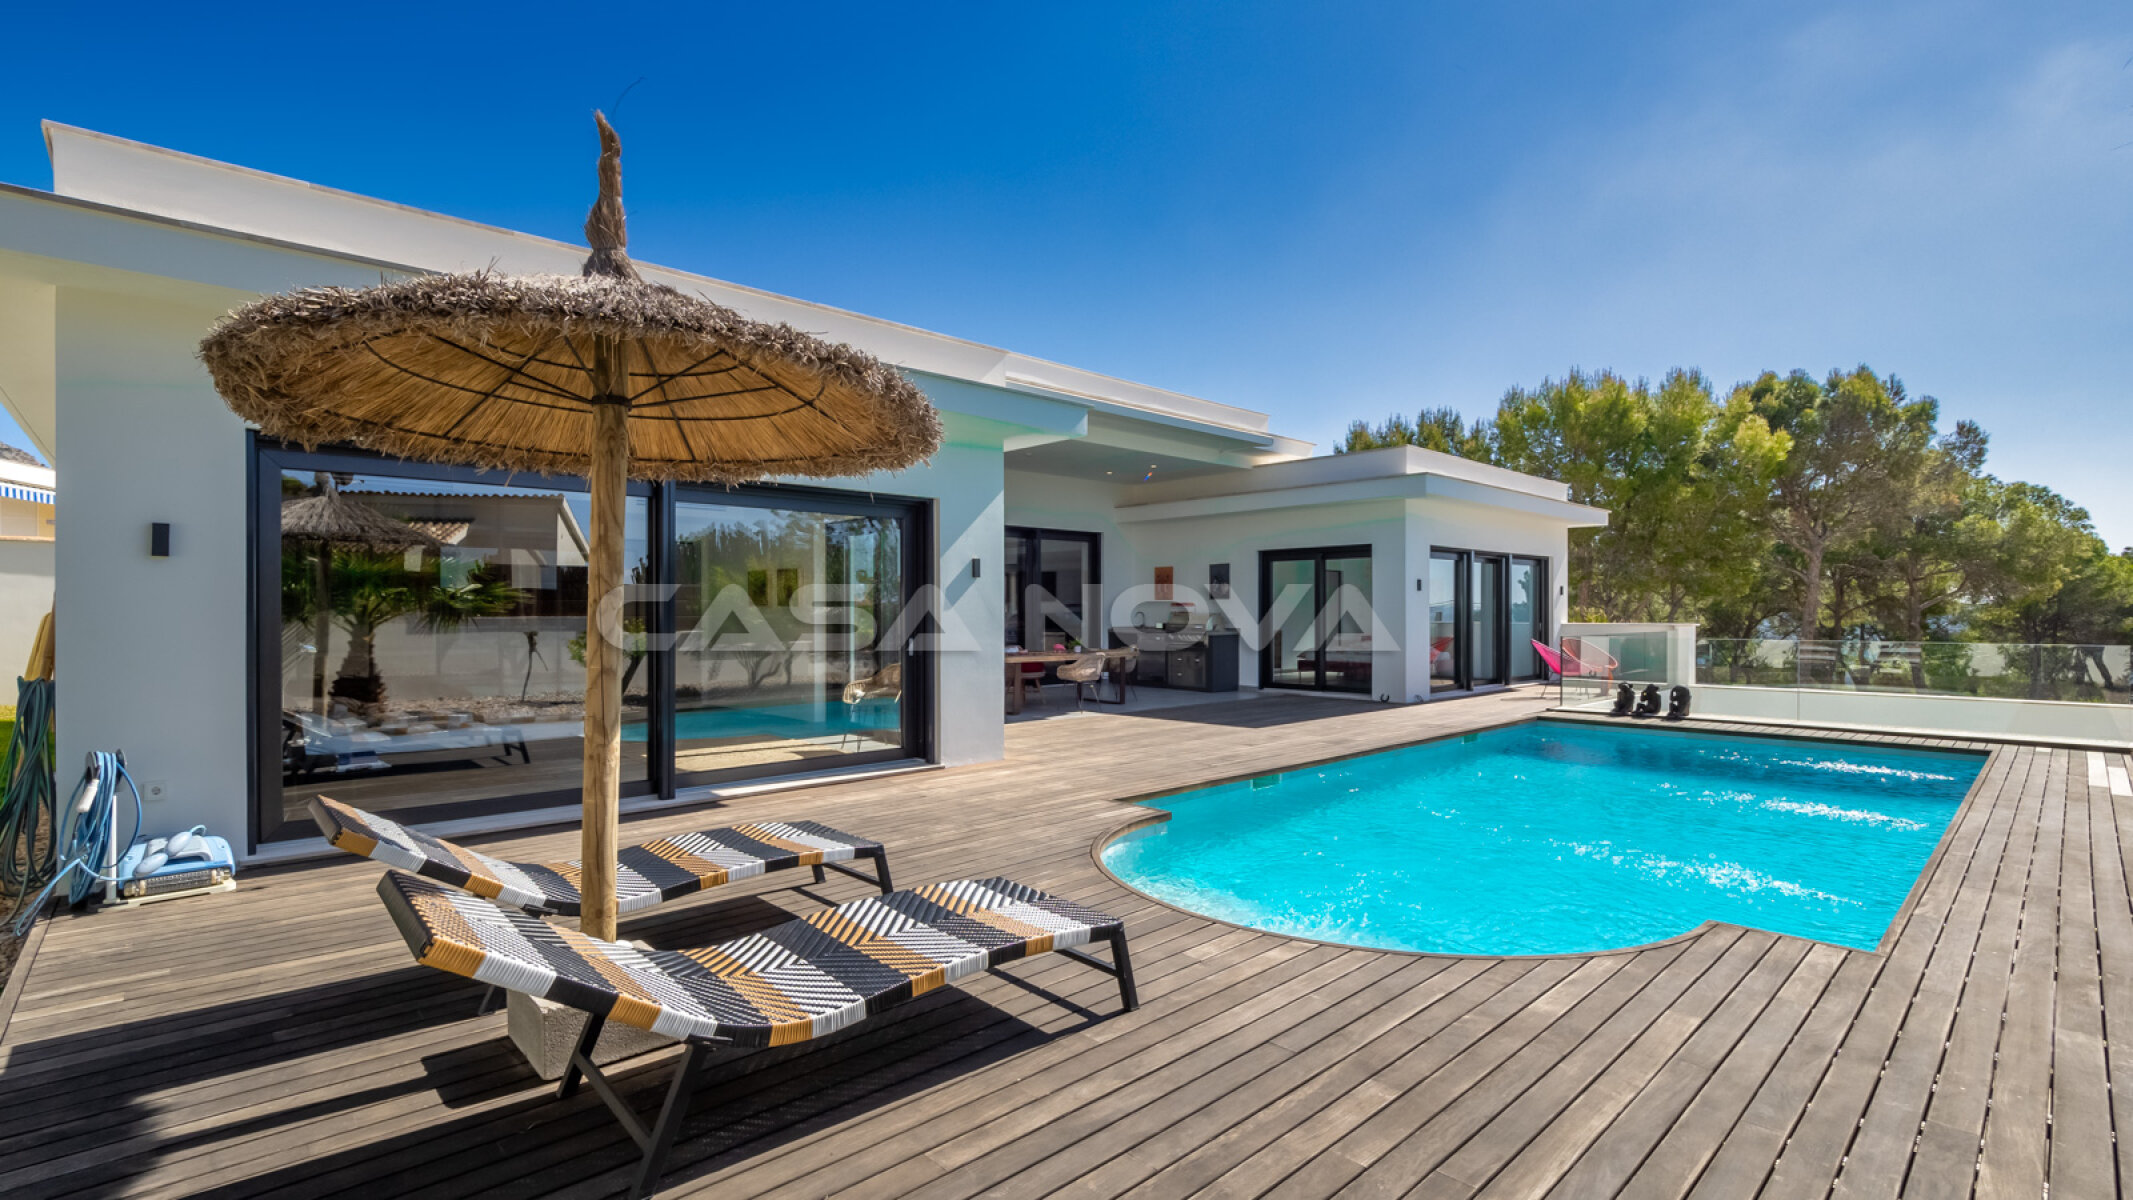 Villa en Mallorca con piscina al estilo ibicenco